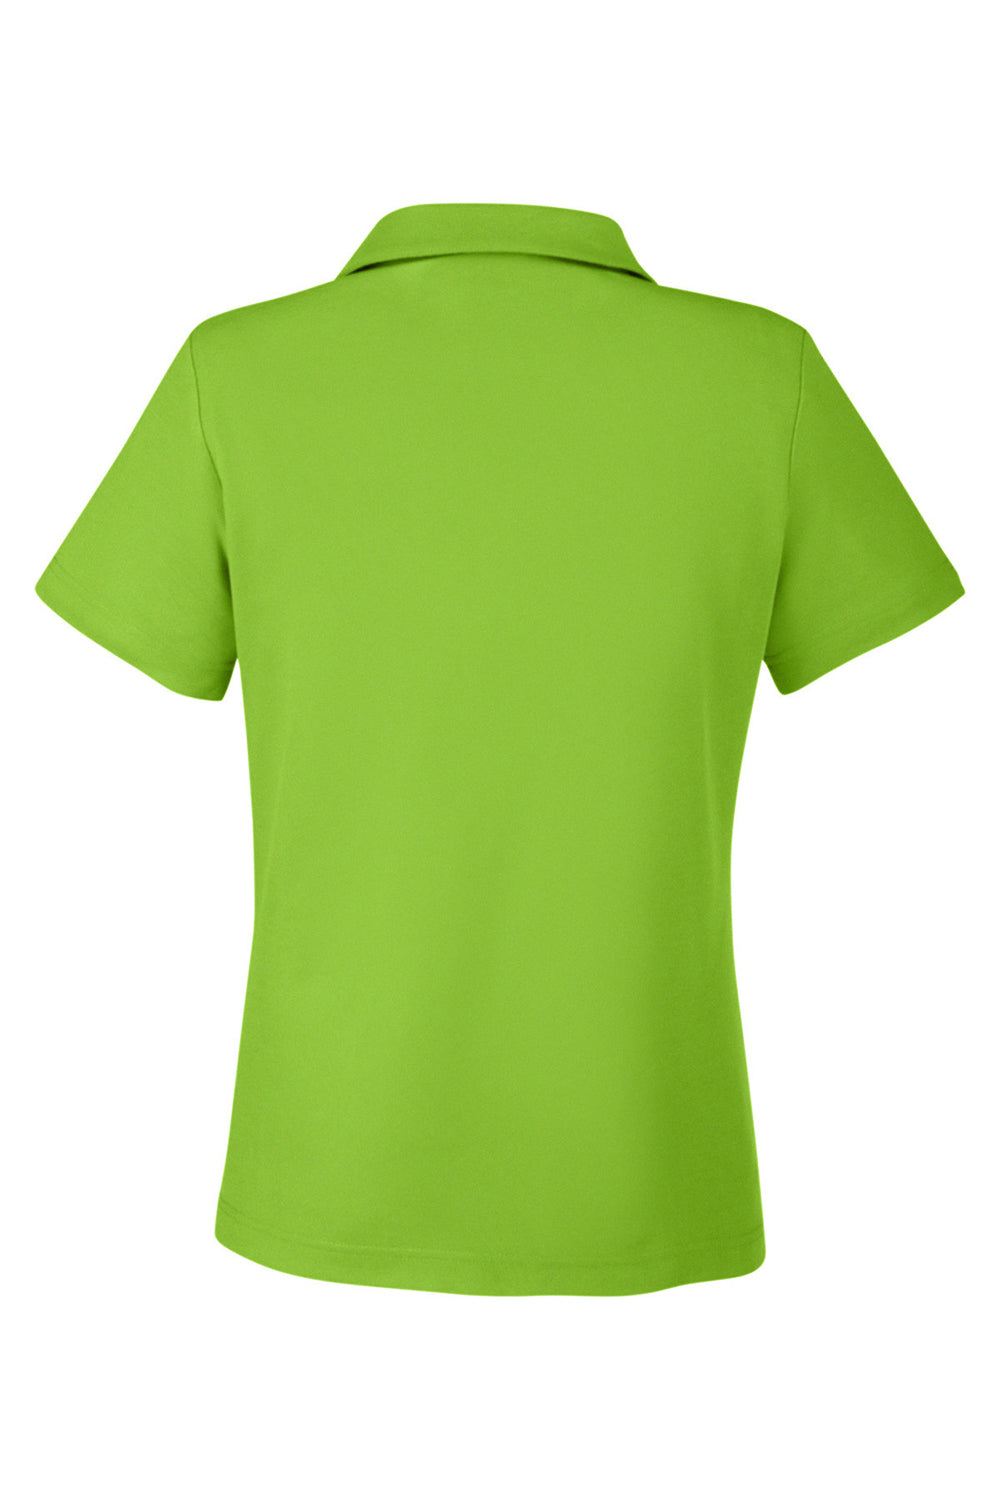 Core 365 CE112W Womens Fusion ChromaSoft Performance Moisture Wicking Pique Short Sleeve Polo Shirt Acid Green Flat Back